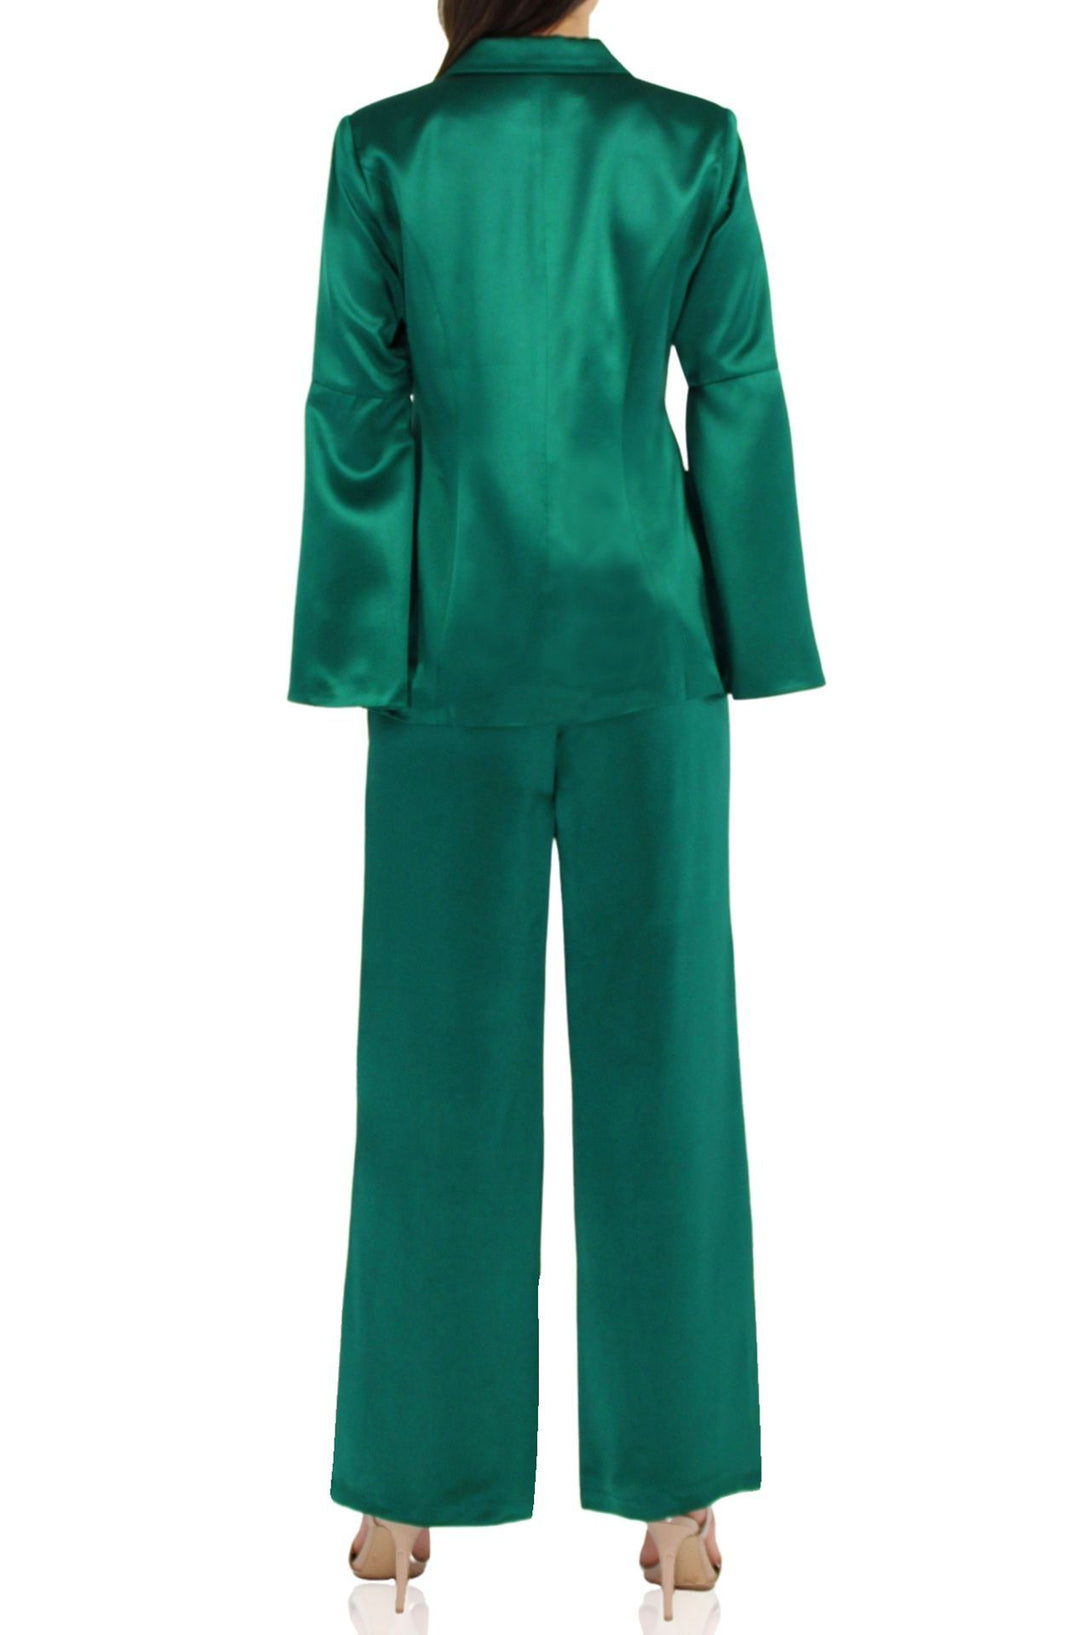 Green-Designer-Jacket-For-Women-By-Kyle